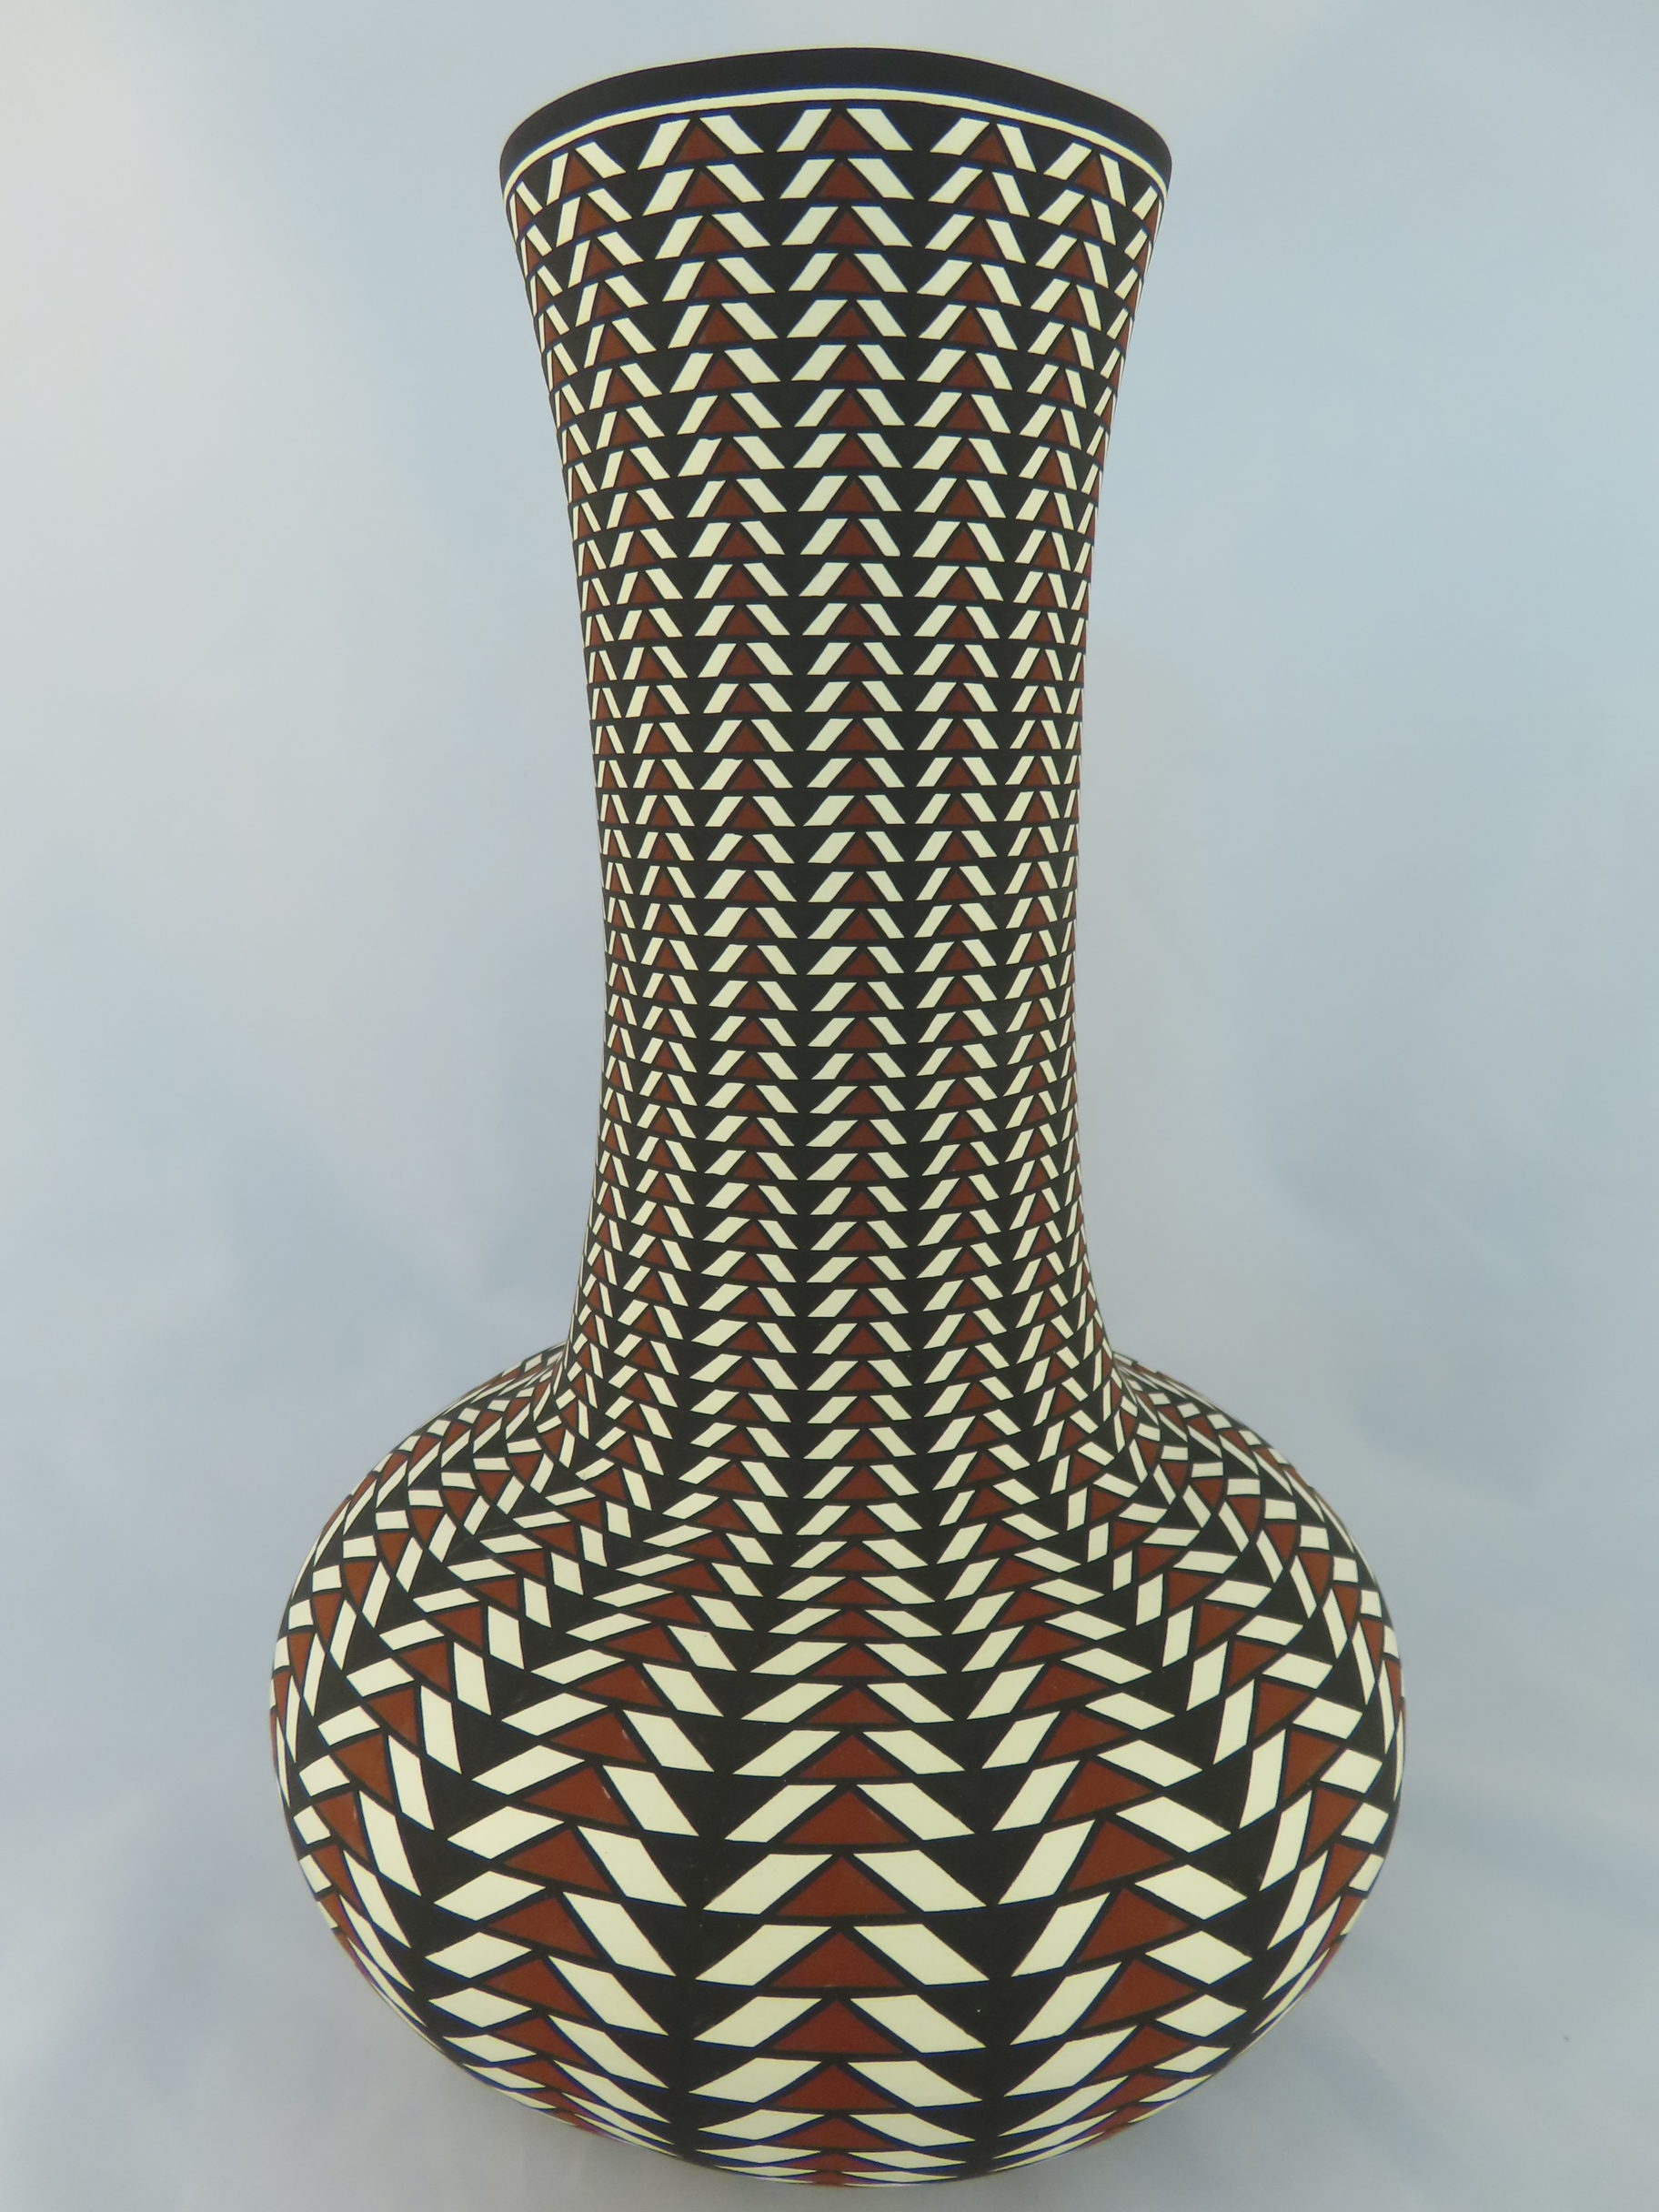 Acoma Pottery - TALL Black & White Painted Vase by Acoma Pueblo potter, Paula Estevan FOR SALE $1,750-